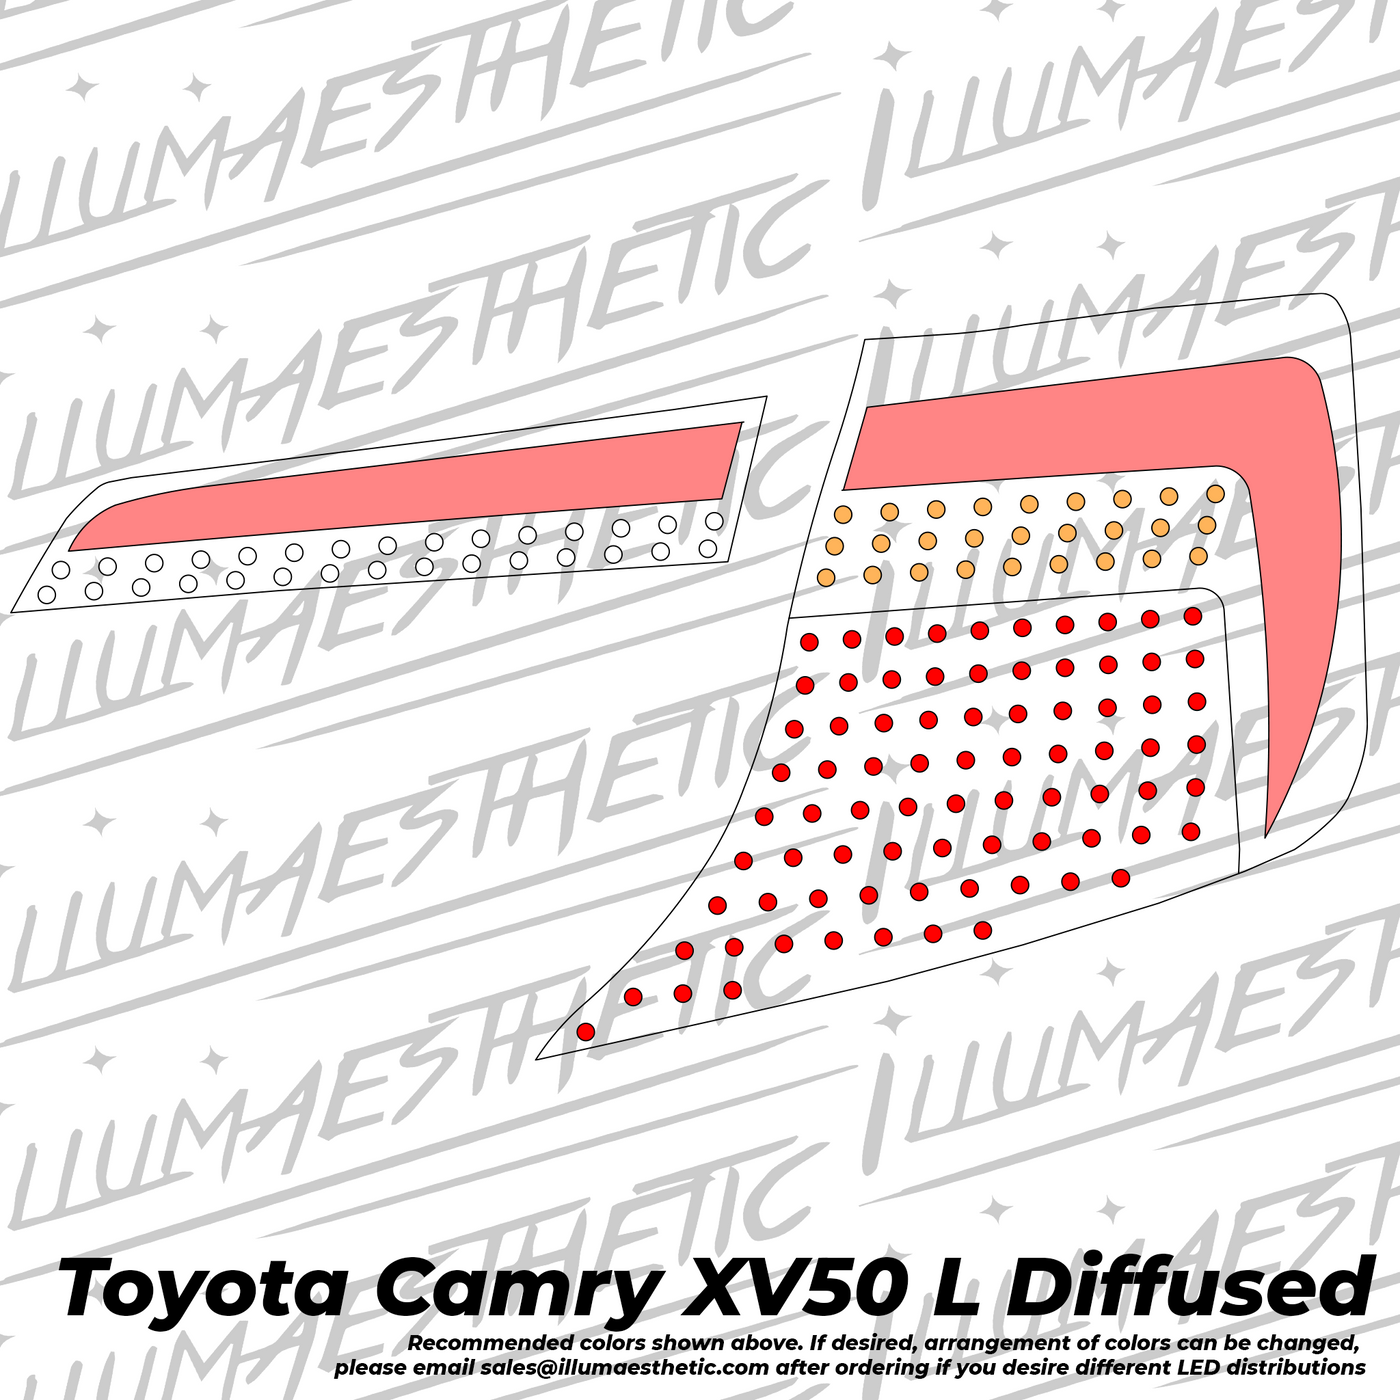 Toyota Camry (XV50, 11-17) - Complete DIY Kit